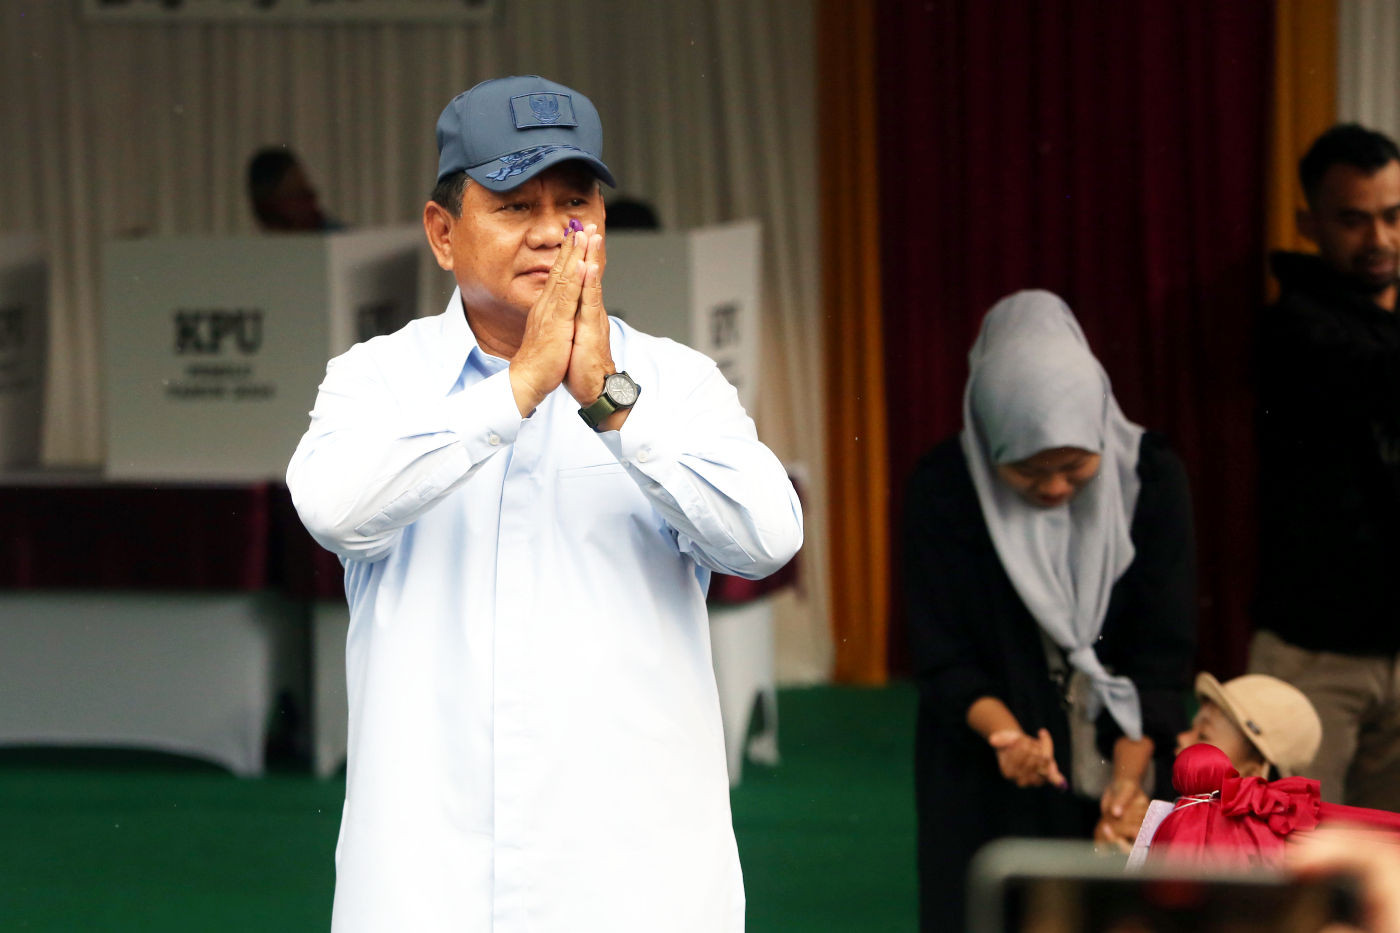 Pakar Sebut Prabowo Mampu Lanjutkan Strategi Geopolitik Jokowi - JPNN.com